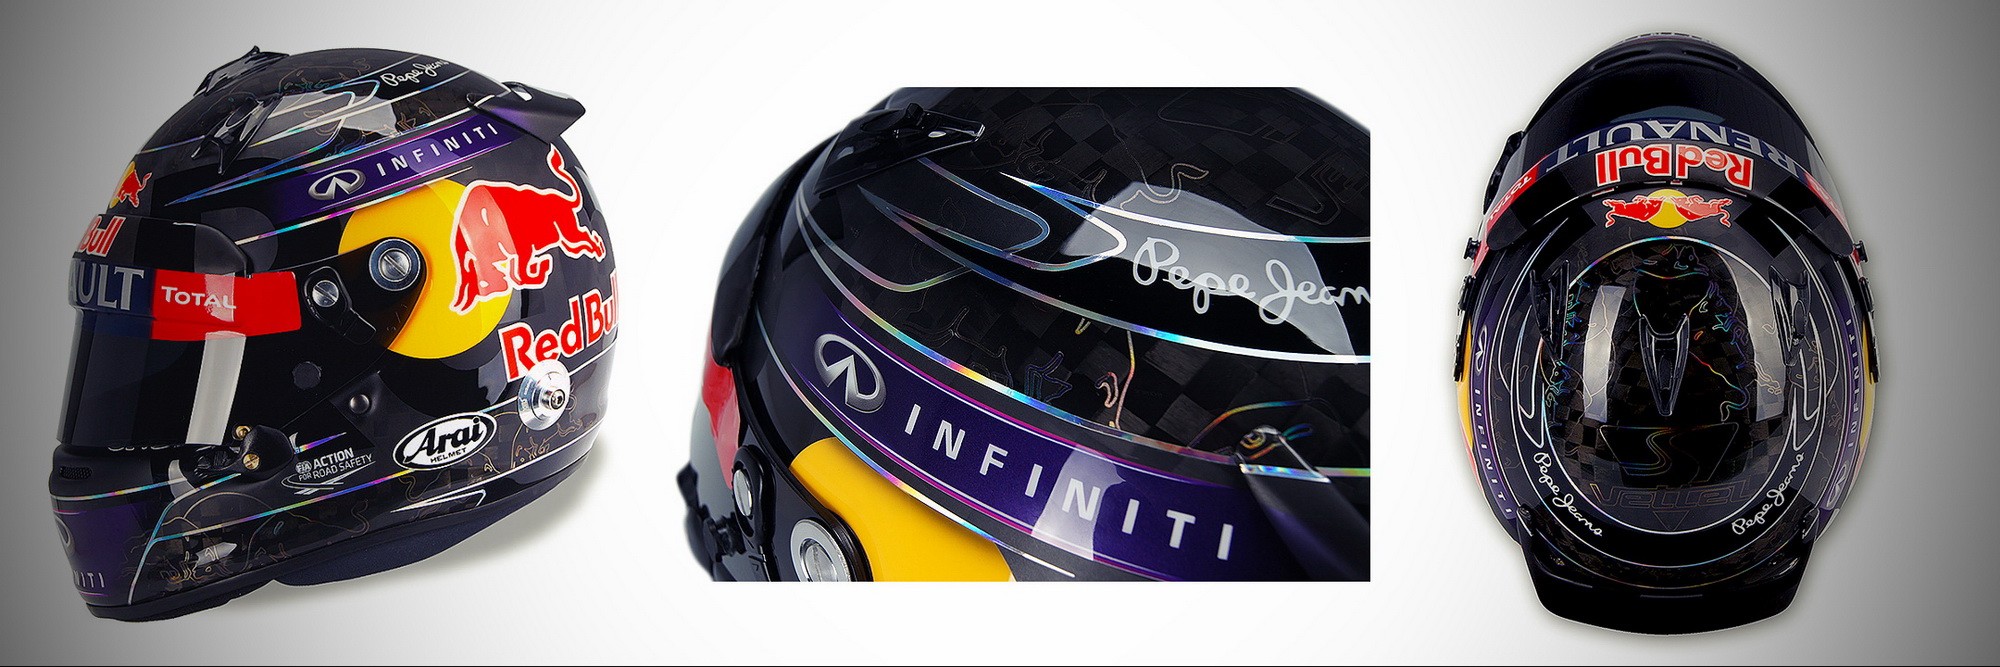 Шлем Себастьяна Феттеля на Гран-При Индии 2013 | 2013 Indian Grand Prix helmet of Sebastian Vettel